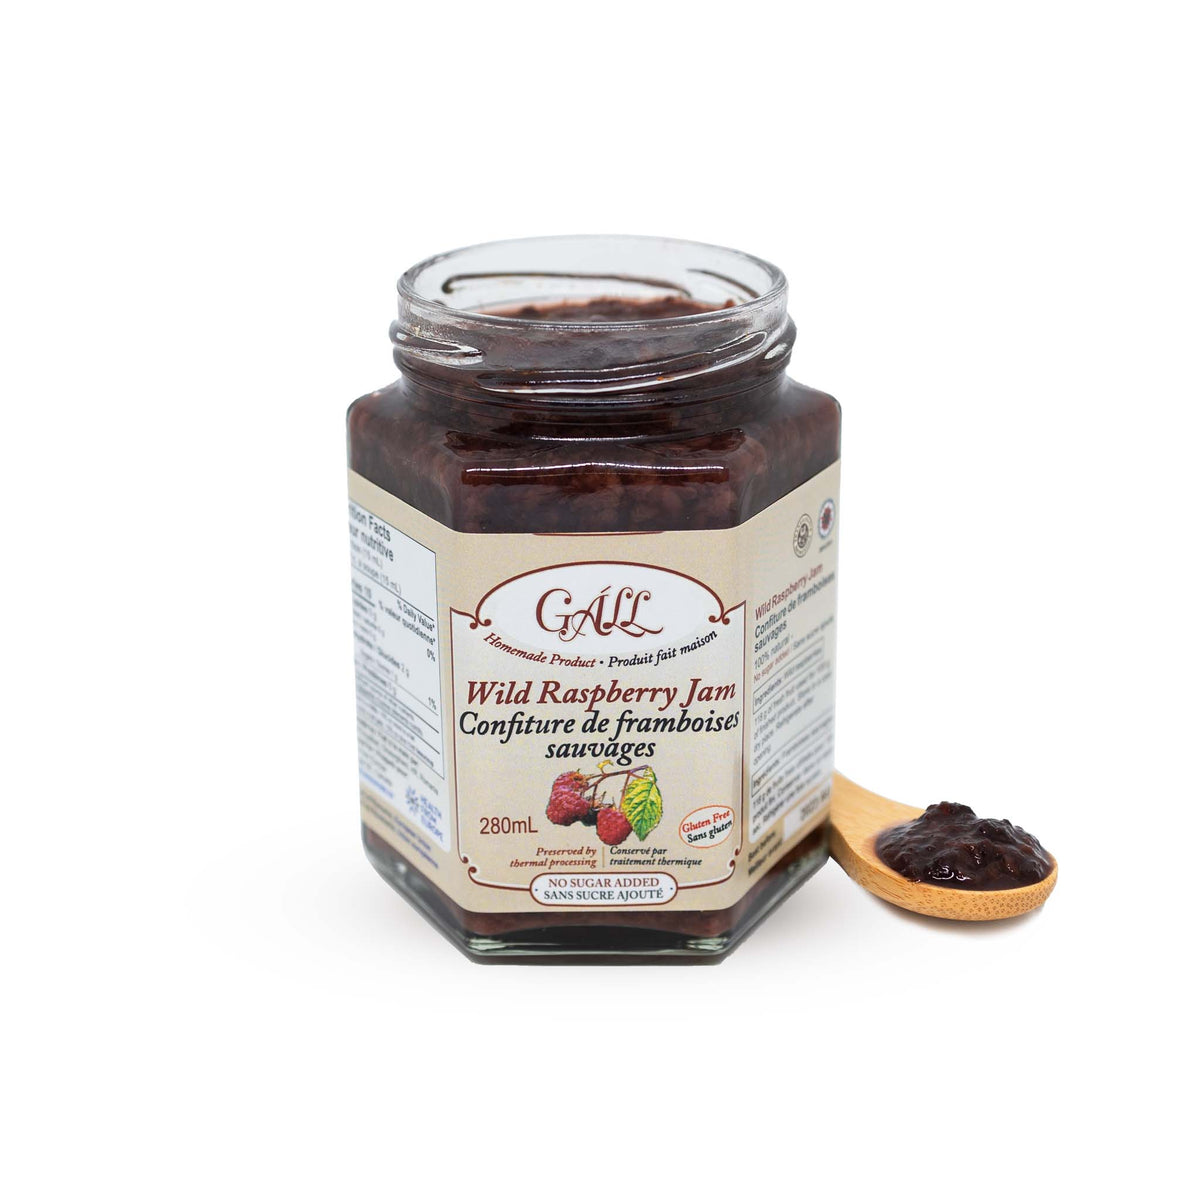 Artisanal No Sugar Added Wild Raspberry Jam open jar spoon Health from Europe